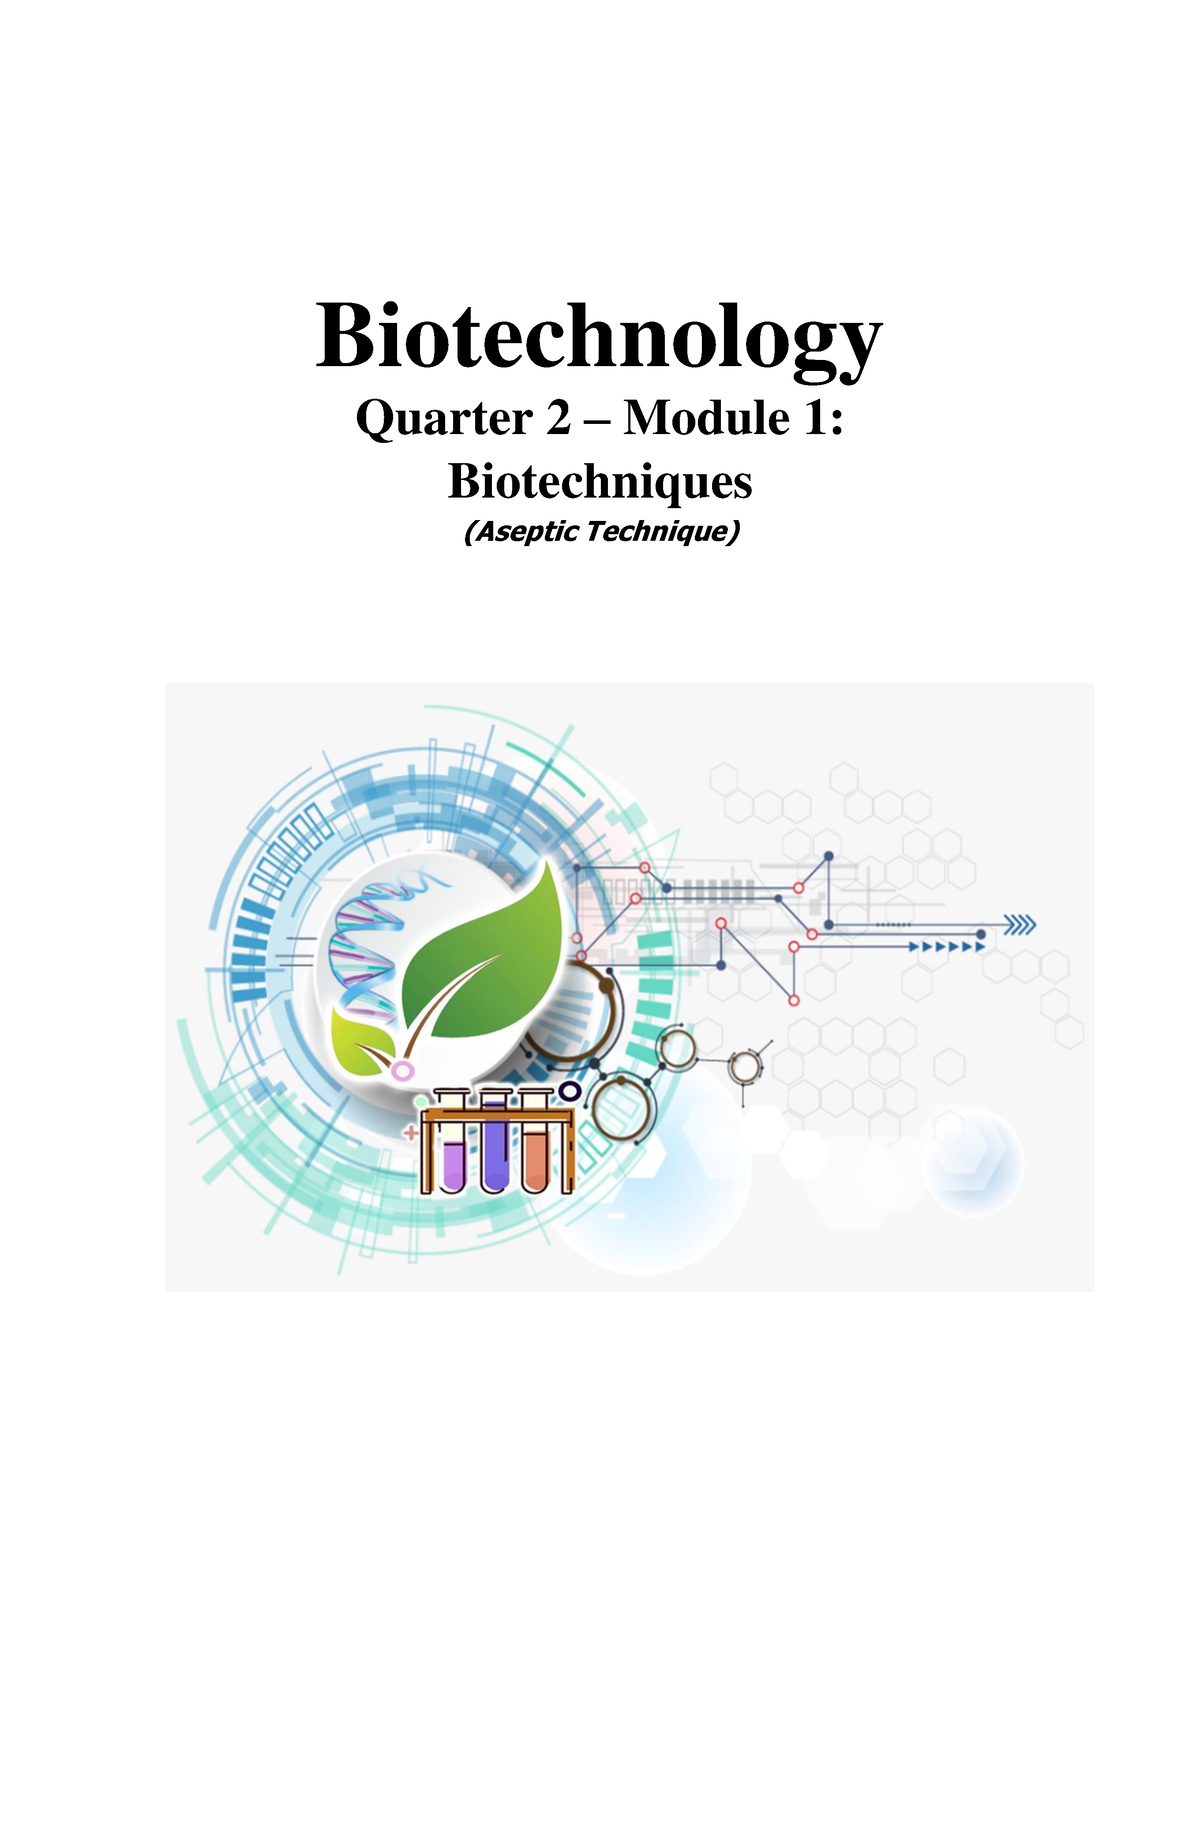 LAS Biotech 8 Q2W1 Part 1 Biotechnology Quarter 2 Module 1